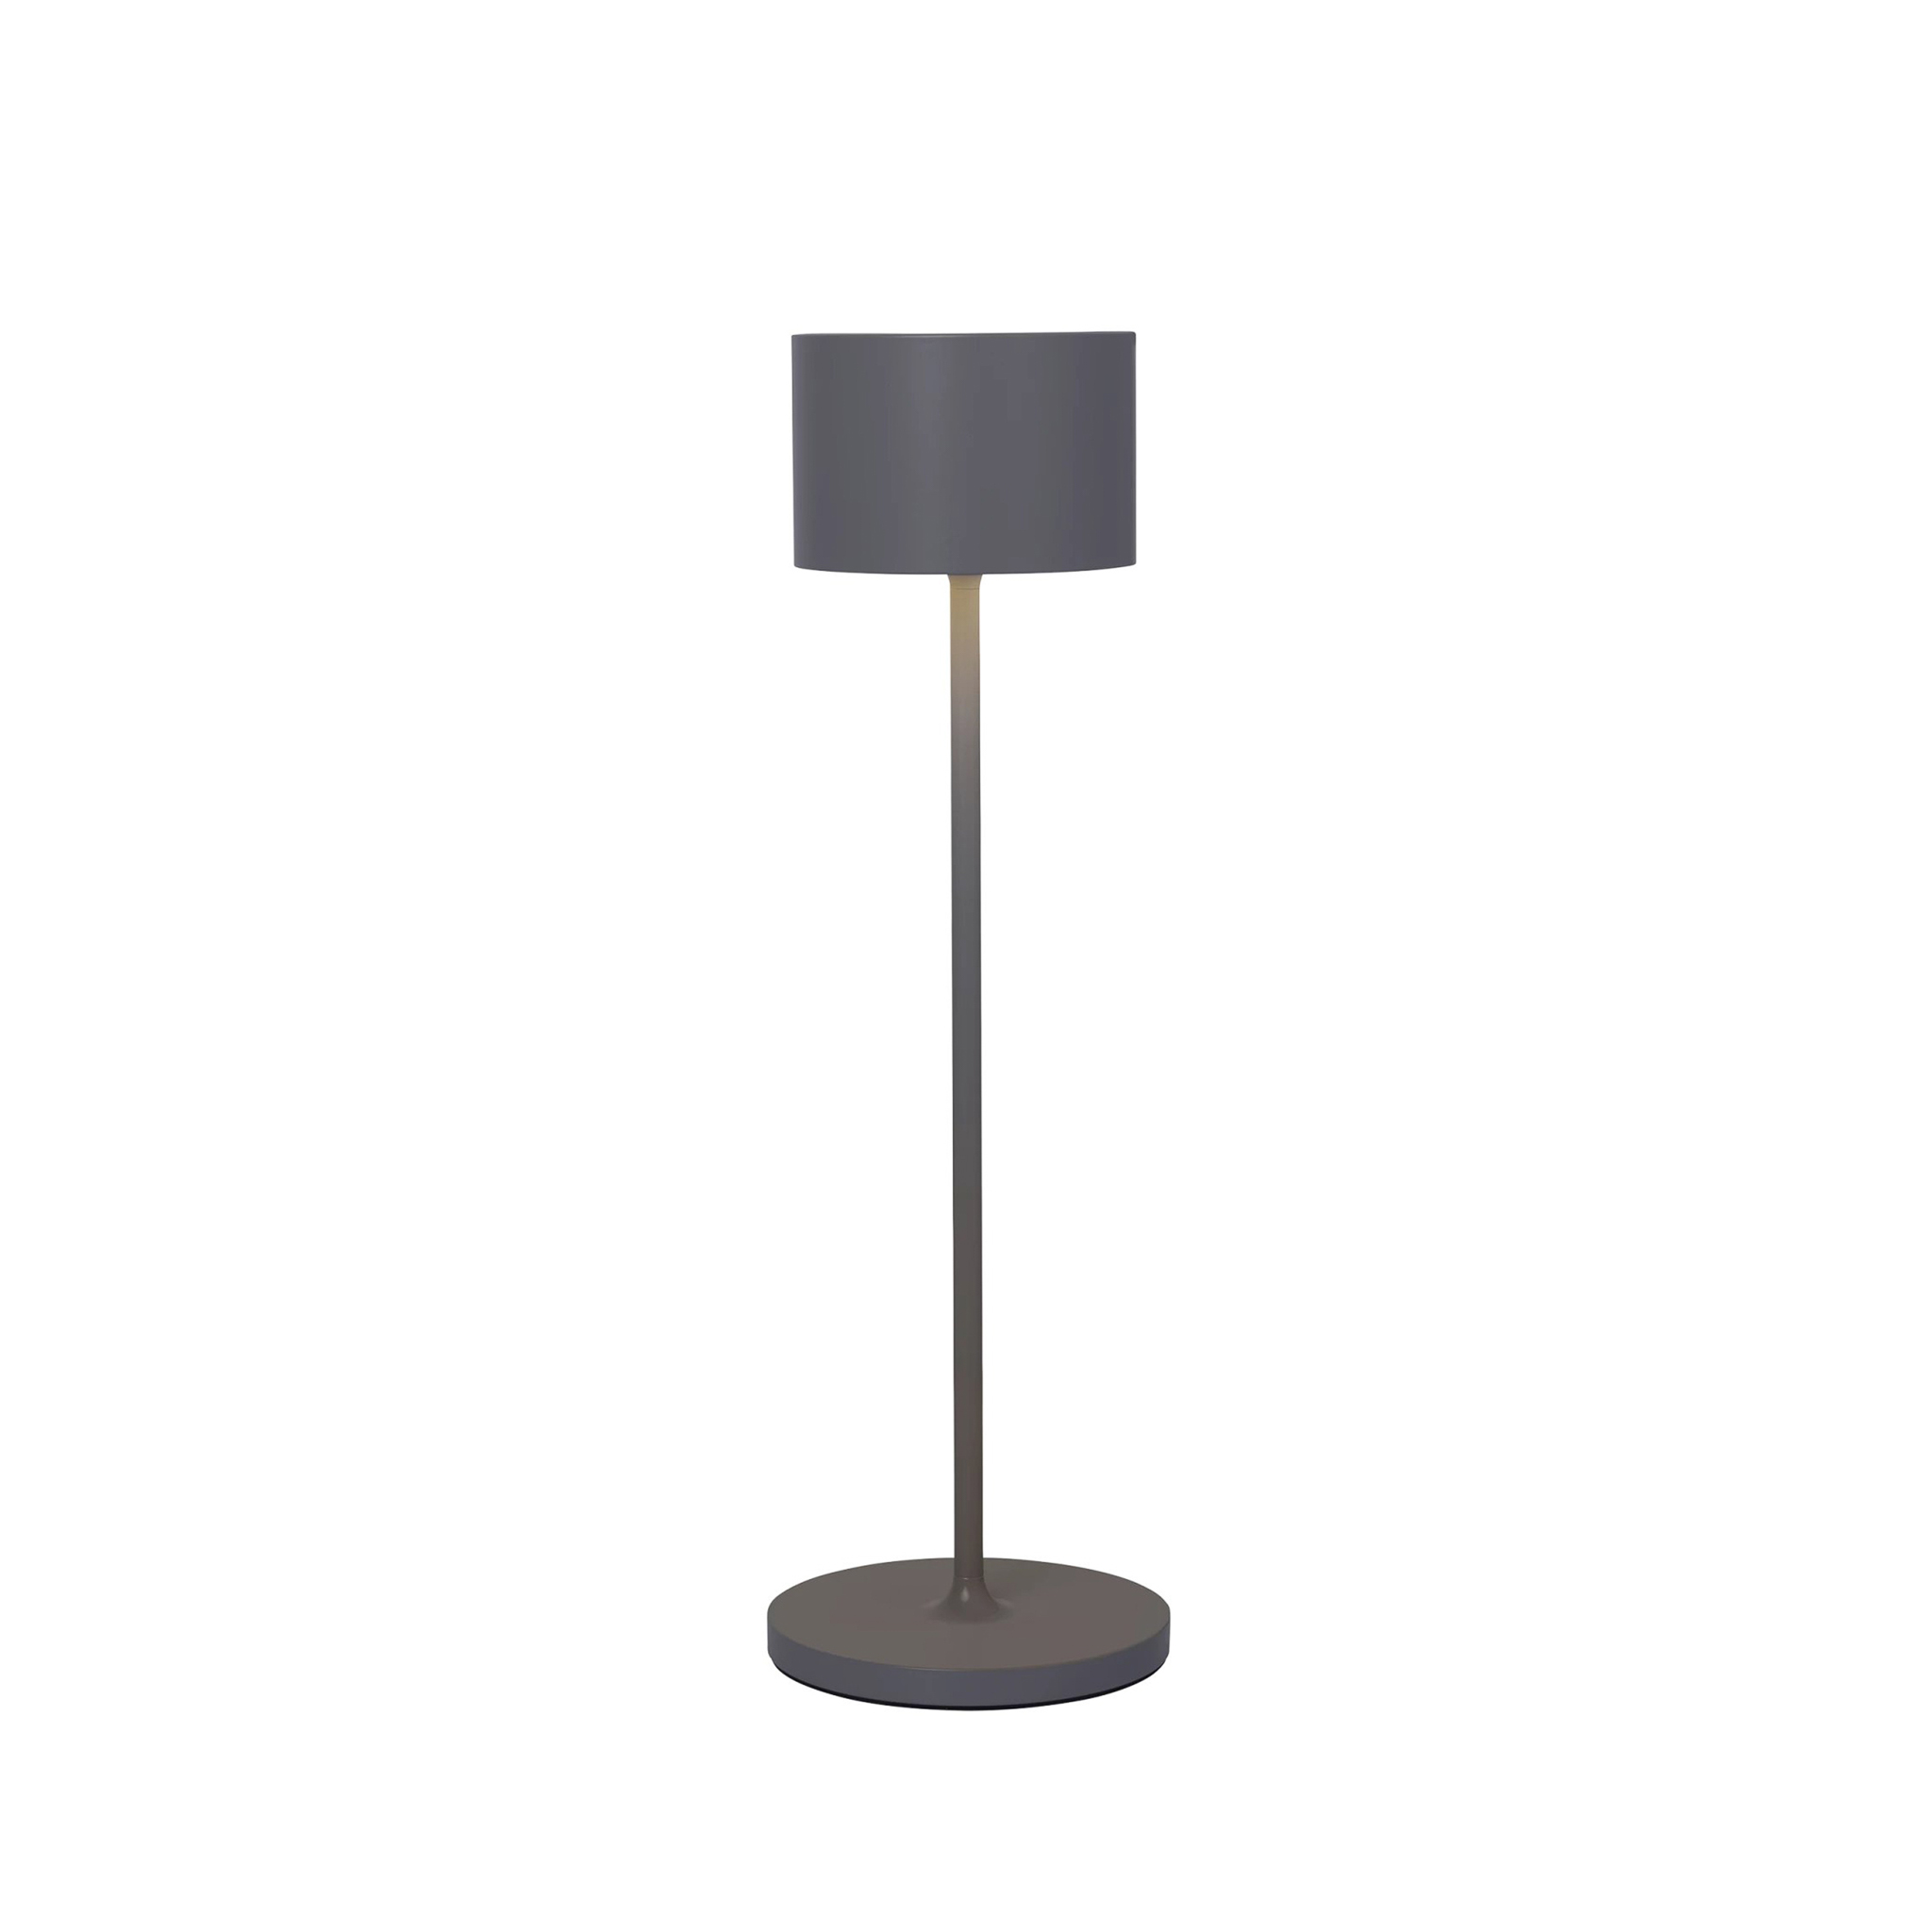 BLOMUS // FAROL - MOBILE LED TABLE LAMP | WARM GRAY